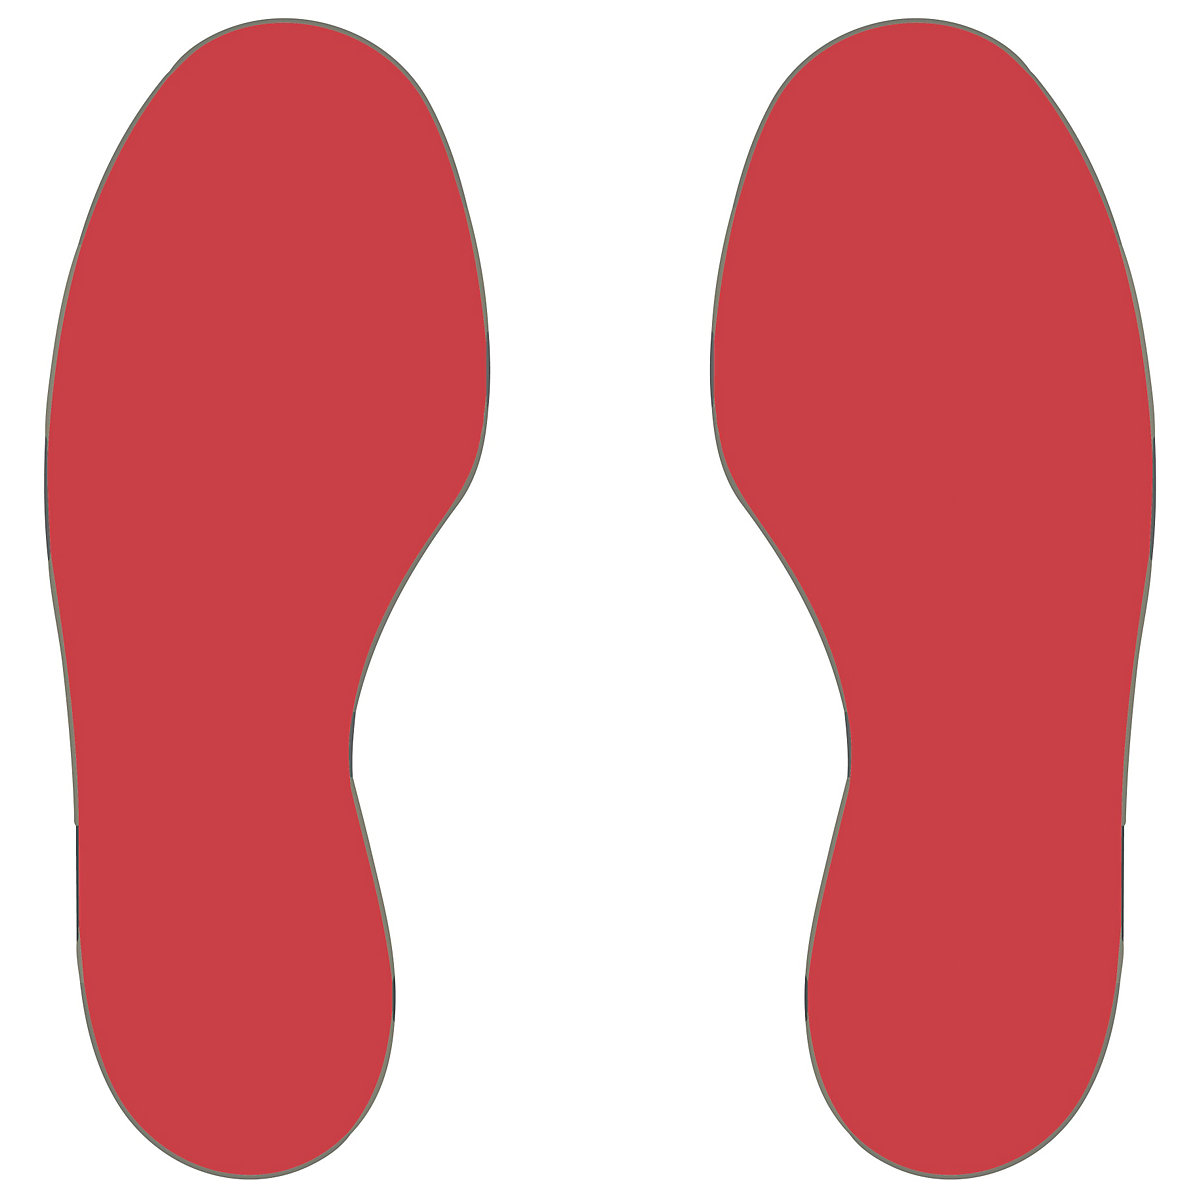 Podlahové značenia z PVC, stopy, 5 pravých / 5 ľavých, OJ 10 ks, červená-2